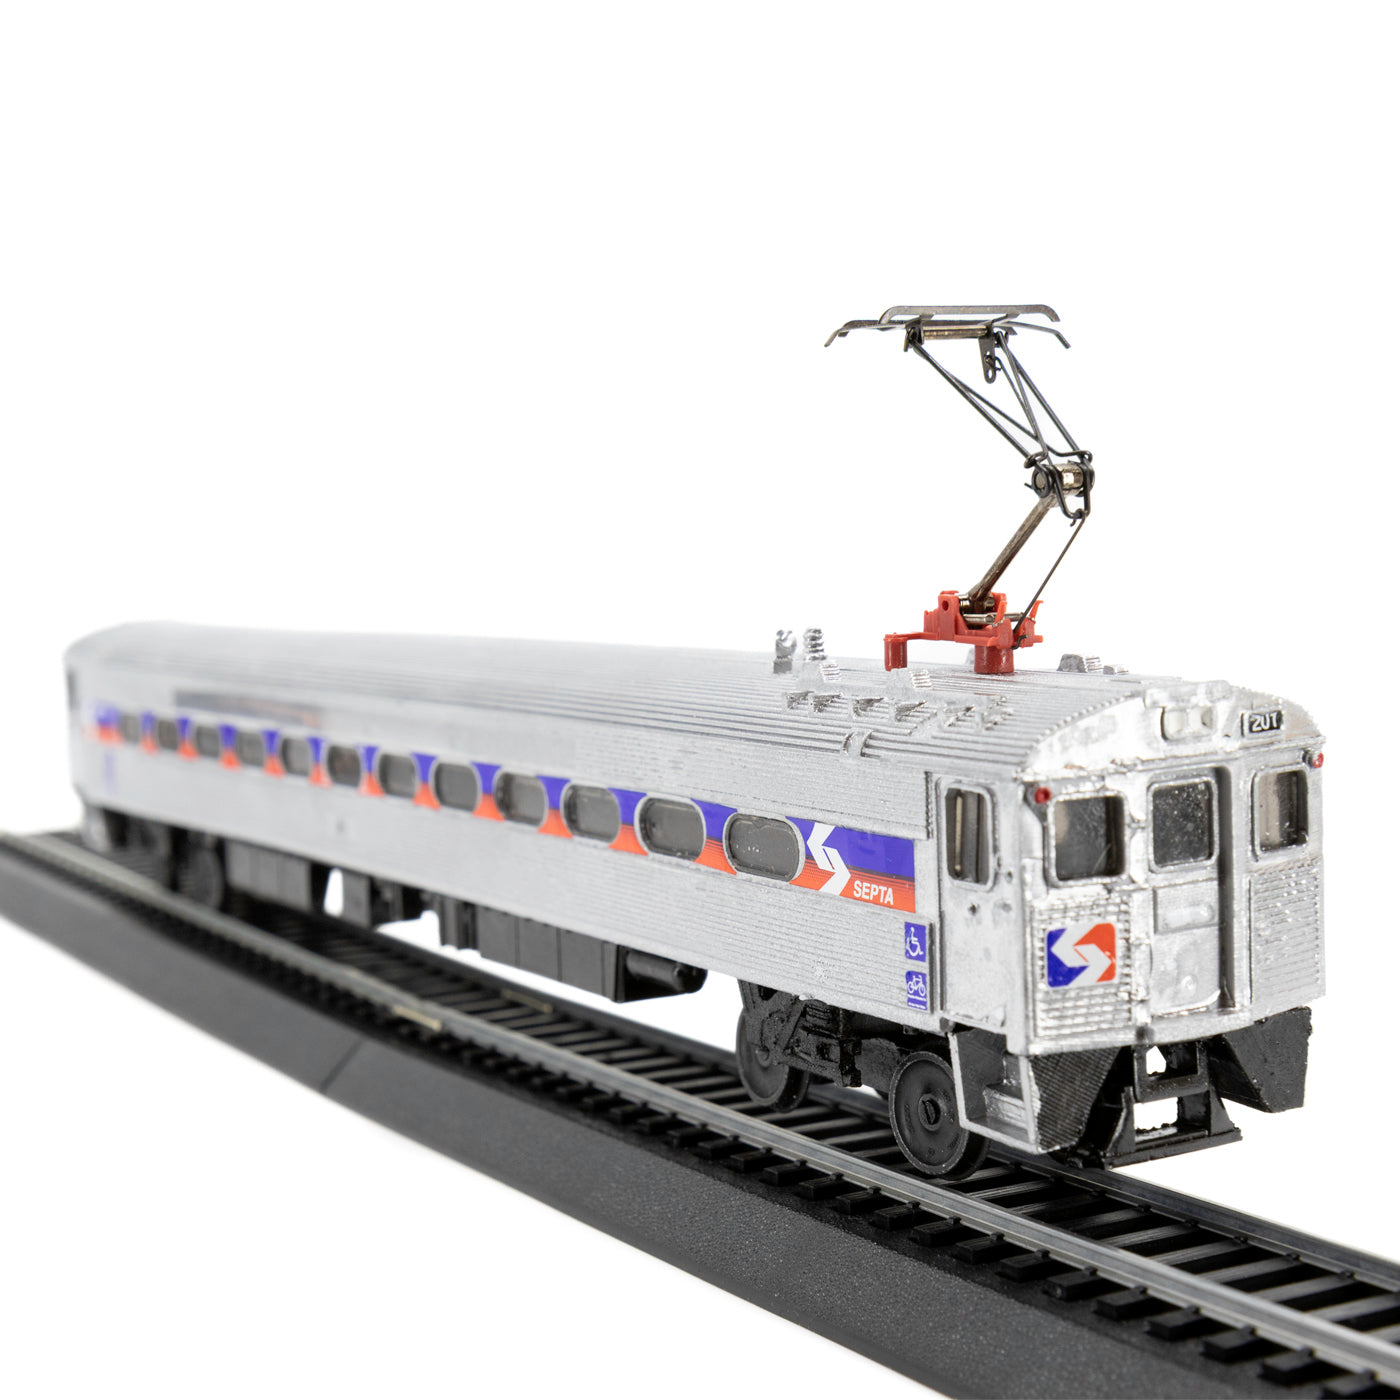 SEPTA Silverliner II - Handcrafted Display Model Train